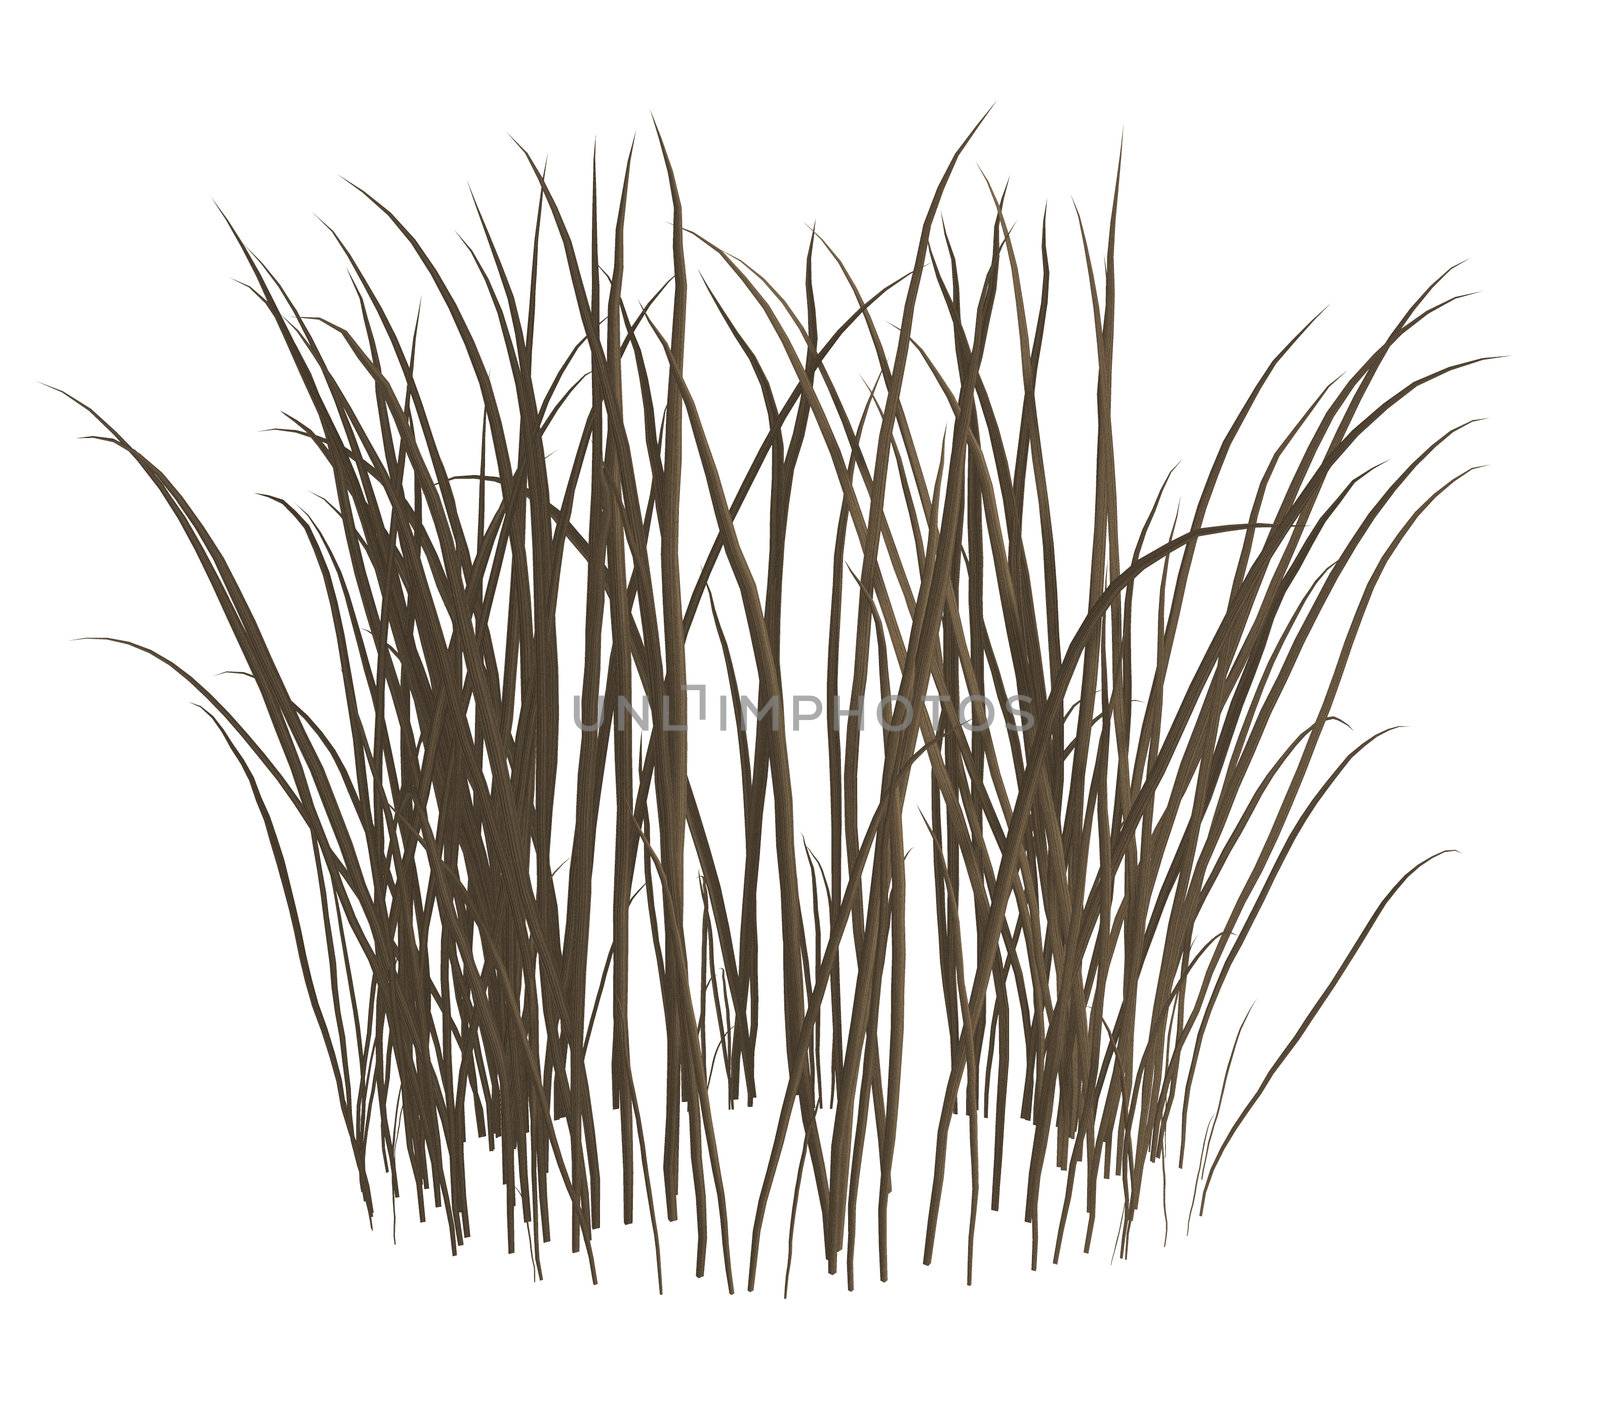 Dead Grass by kathygold